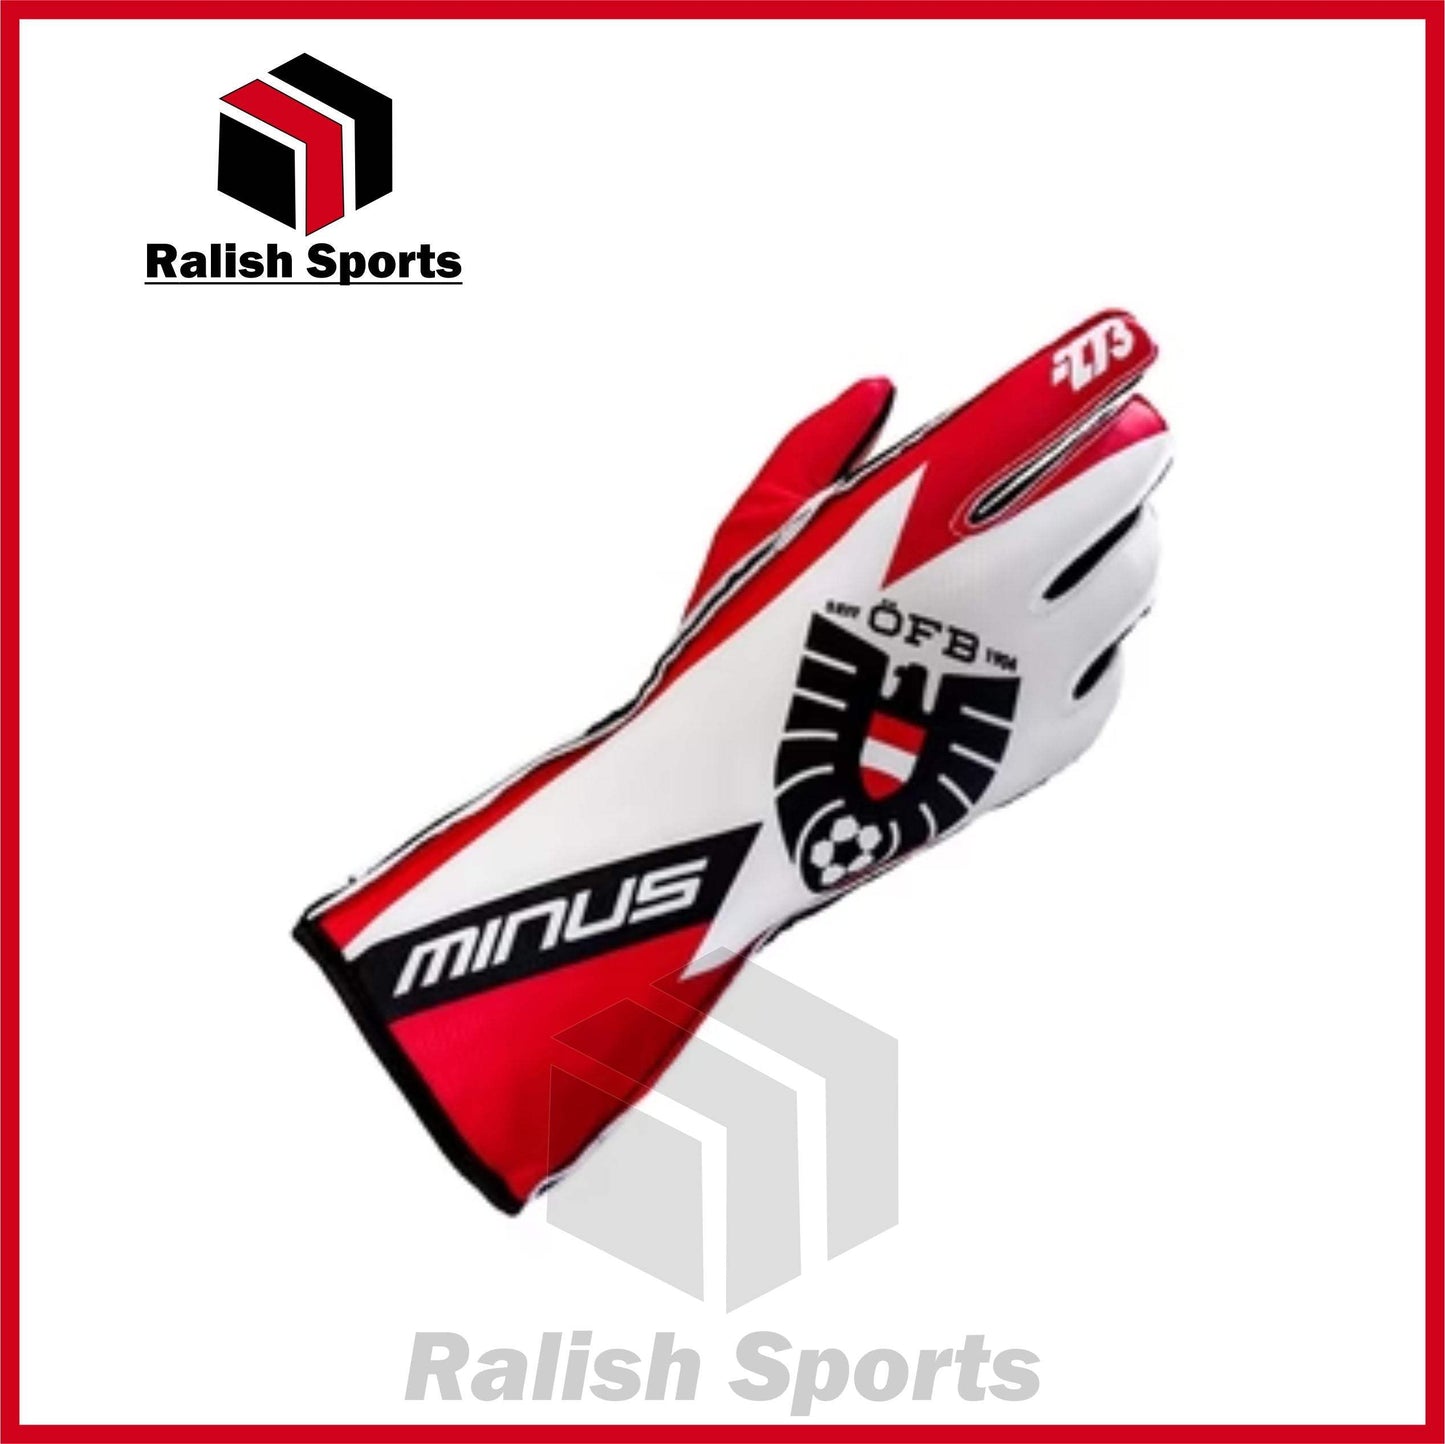 EURO Austria Gloves - Ralish Sports